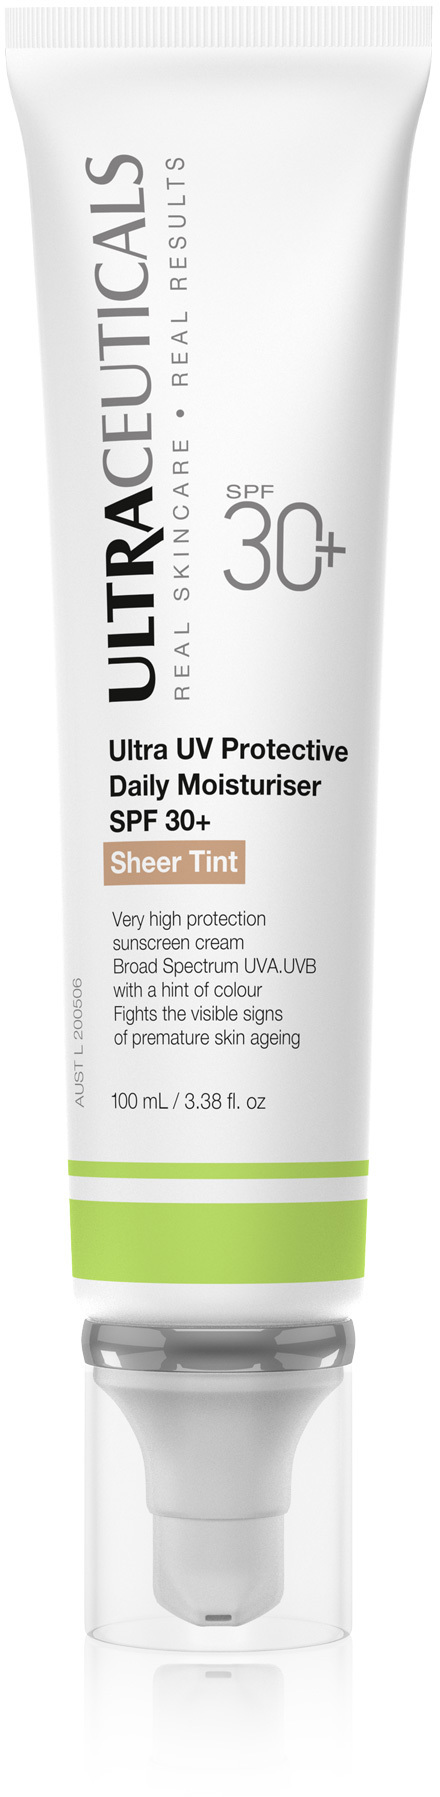 38439-BH-Ultra-UV-Protective-Daily-Moisturiser-SPF-30_-Sheer-Tint-100ml.jpg